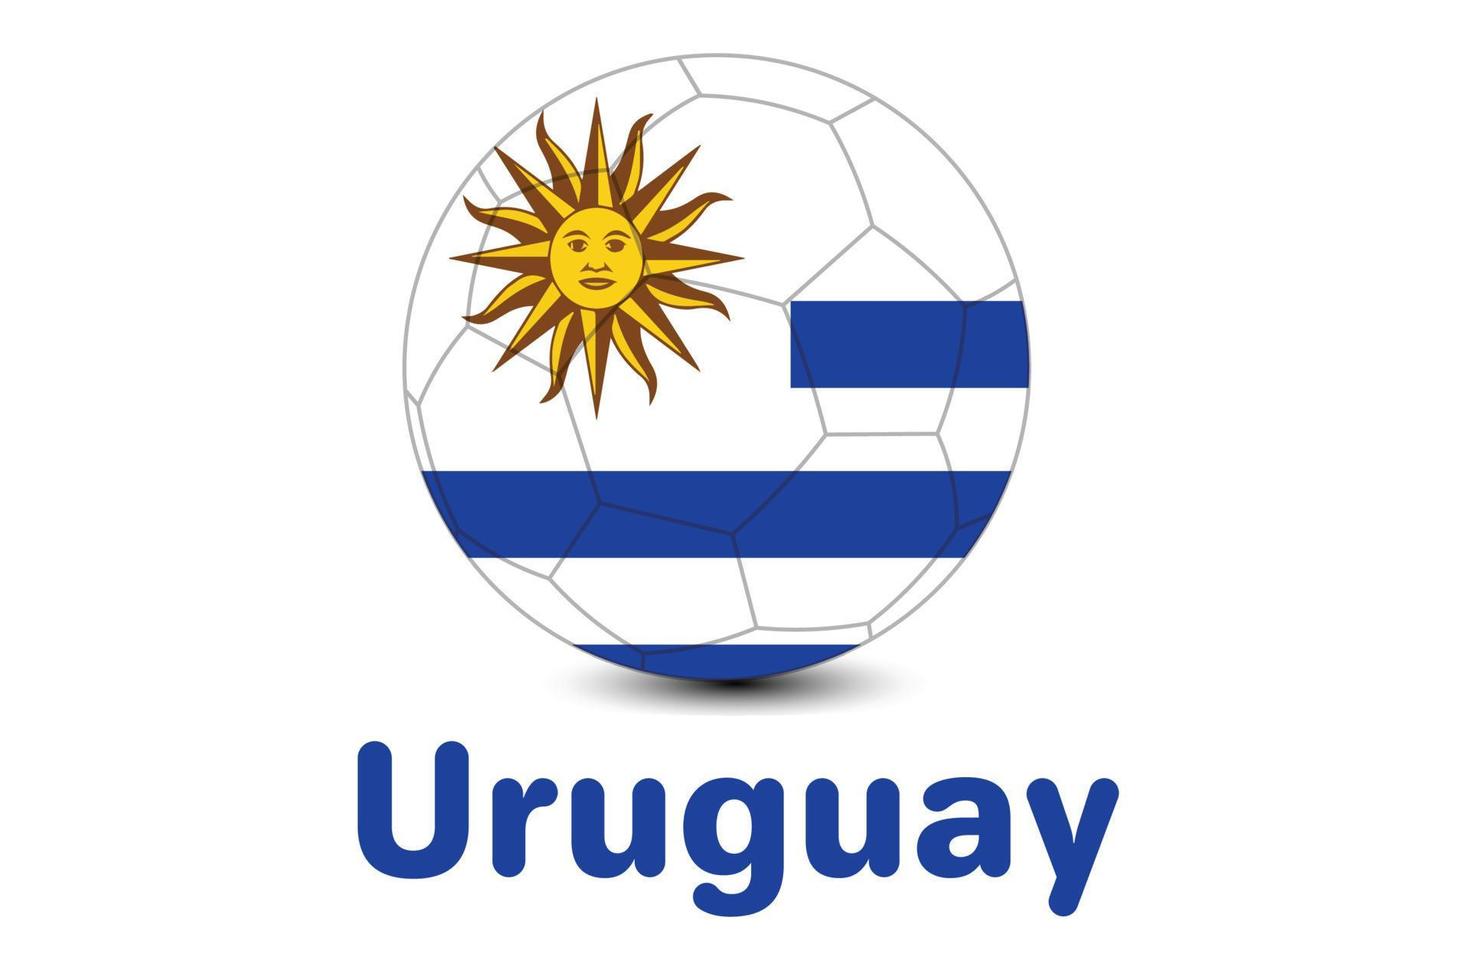 fifa fußballweltmeisterschaft 2022 mit uruguay flagge. katar wm 2022. uruguay flag illustration. vektor